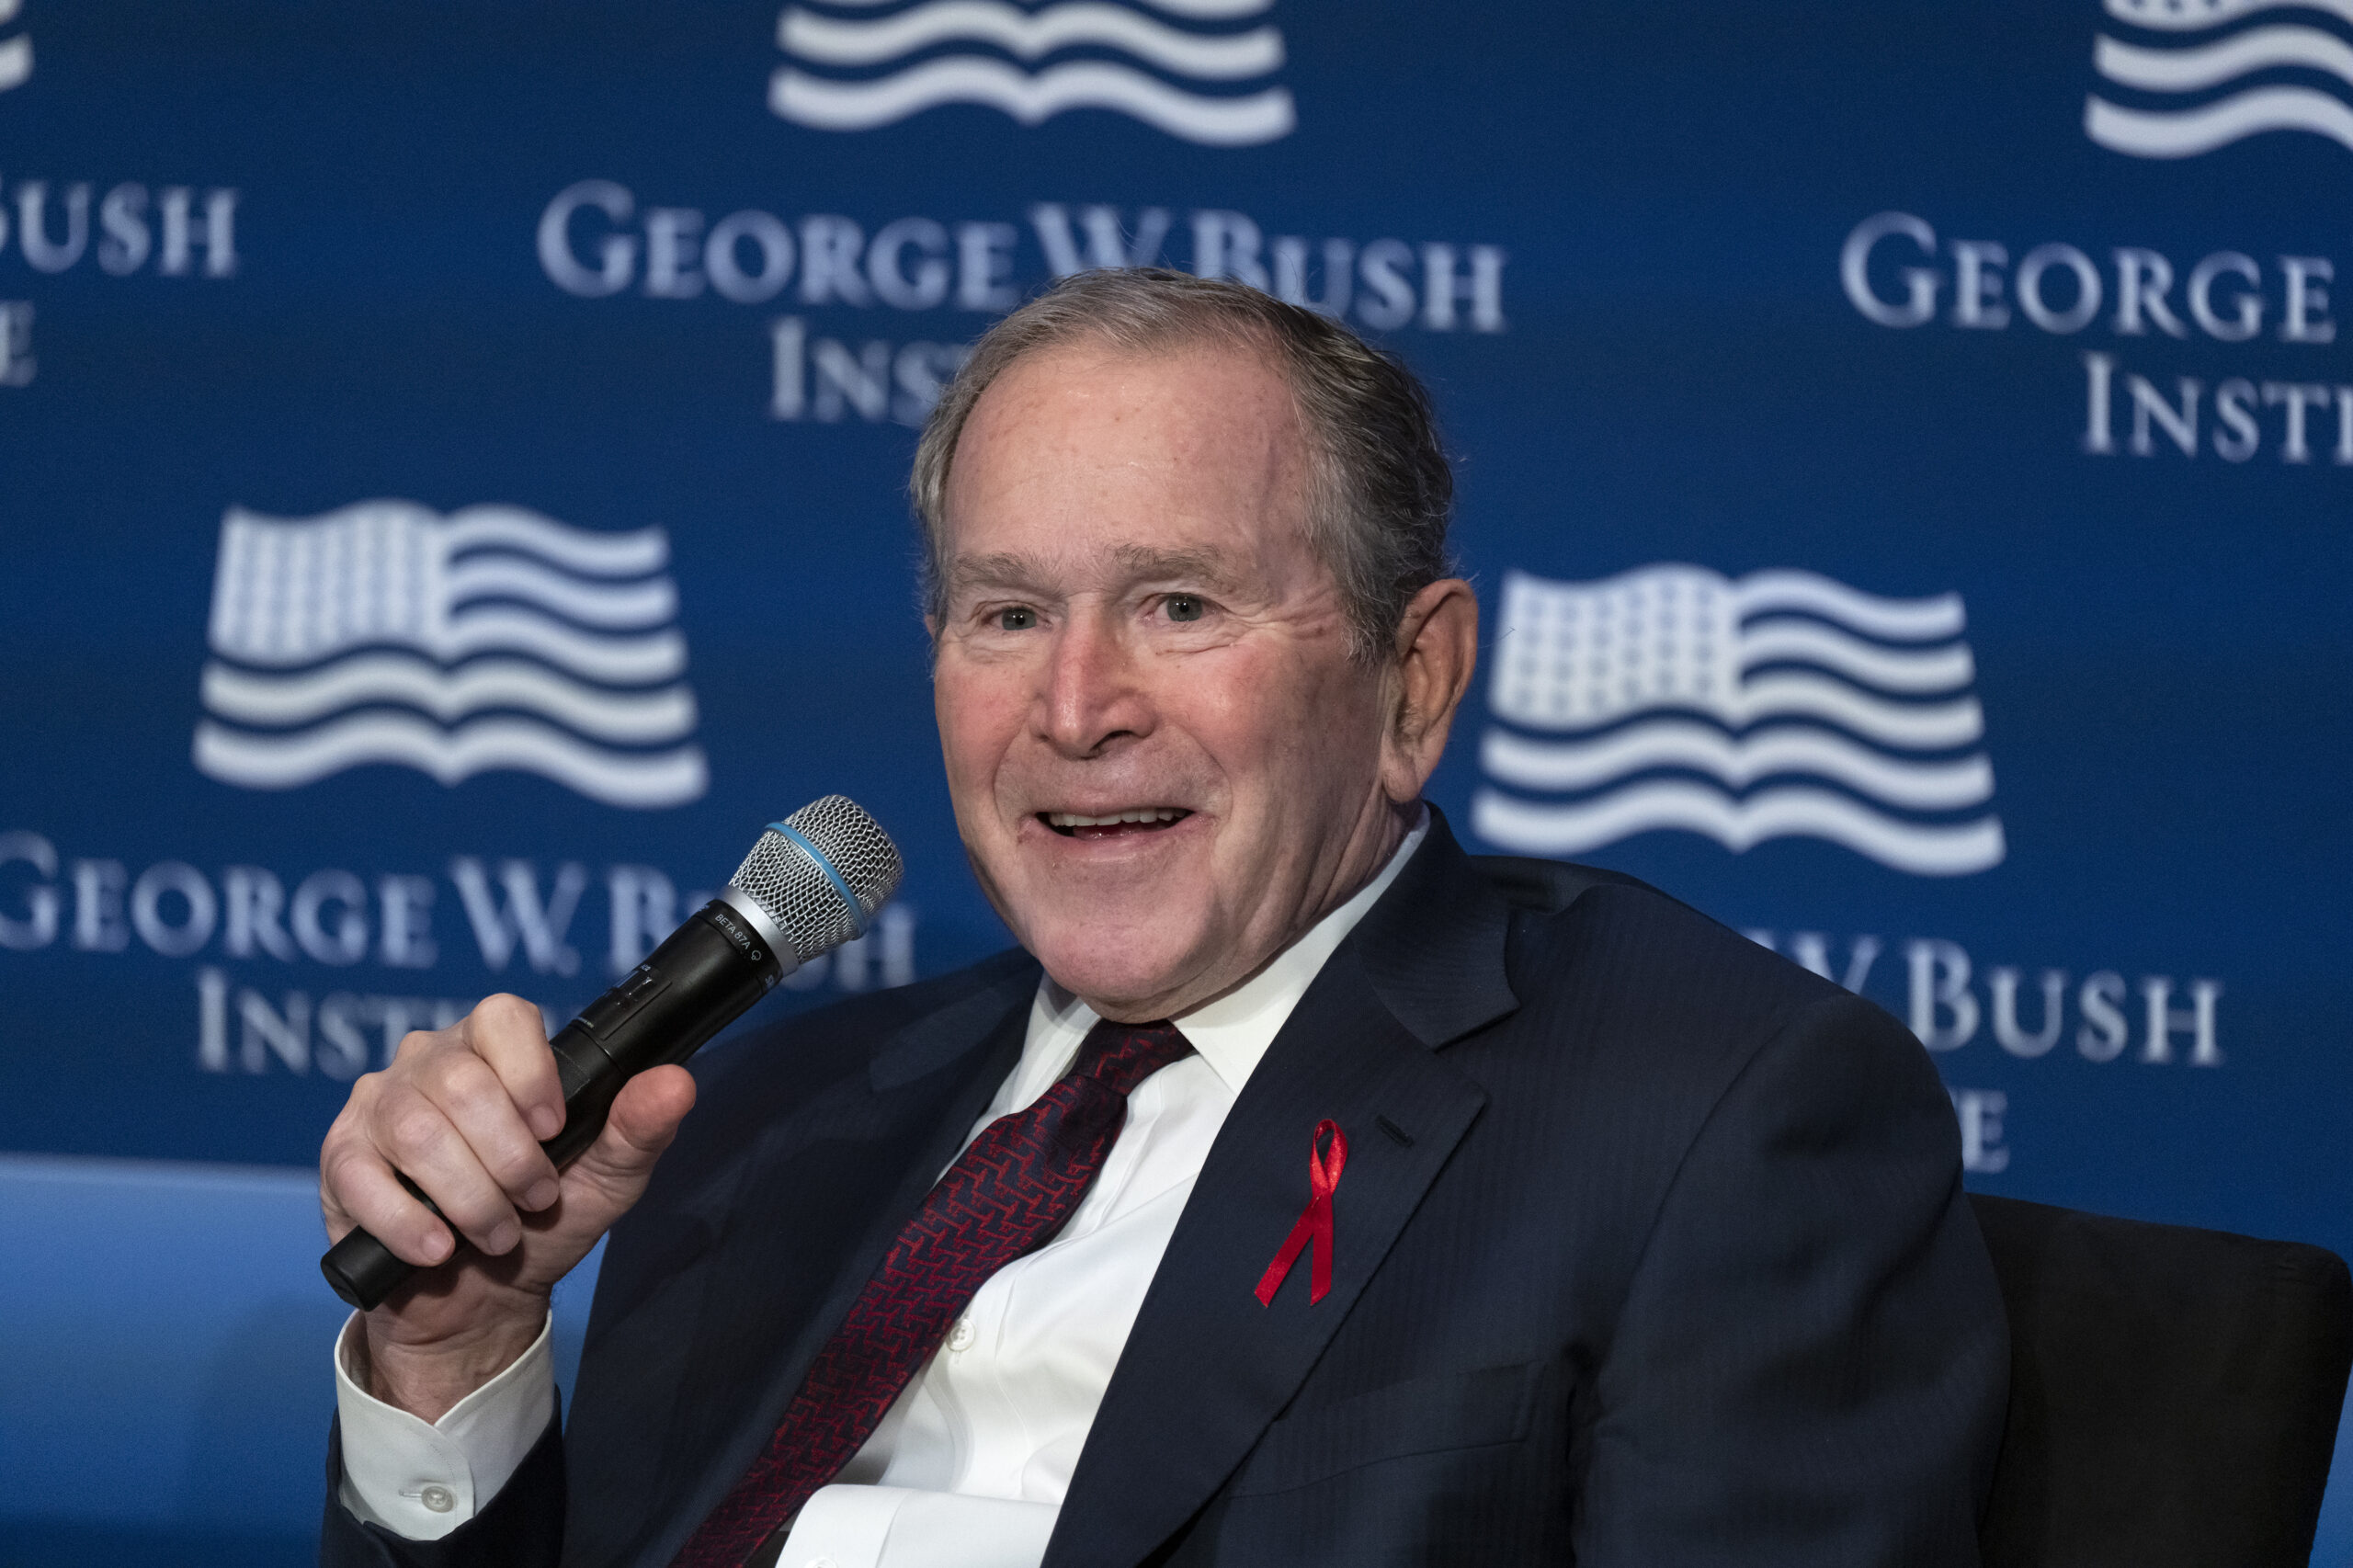 As the deadline approaches, George W. Bush enters the PEPFAR dispute.